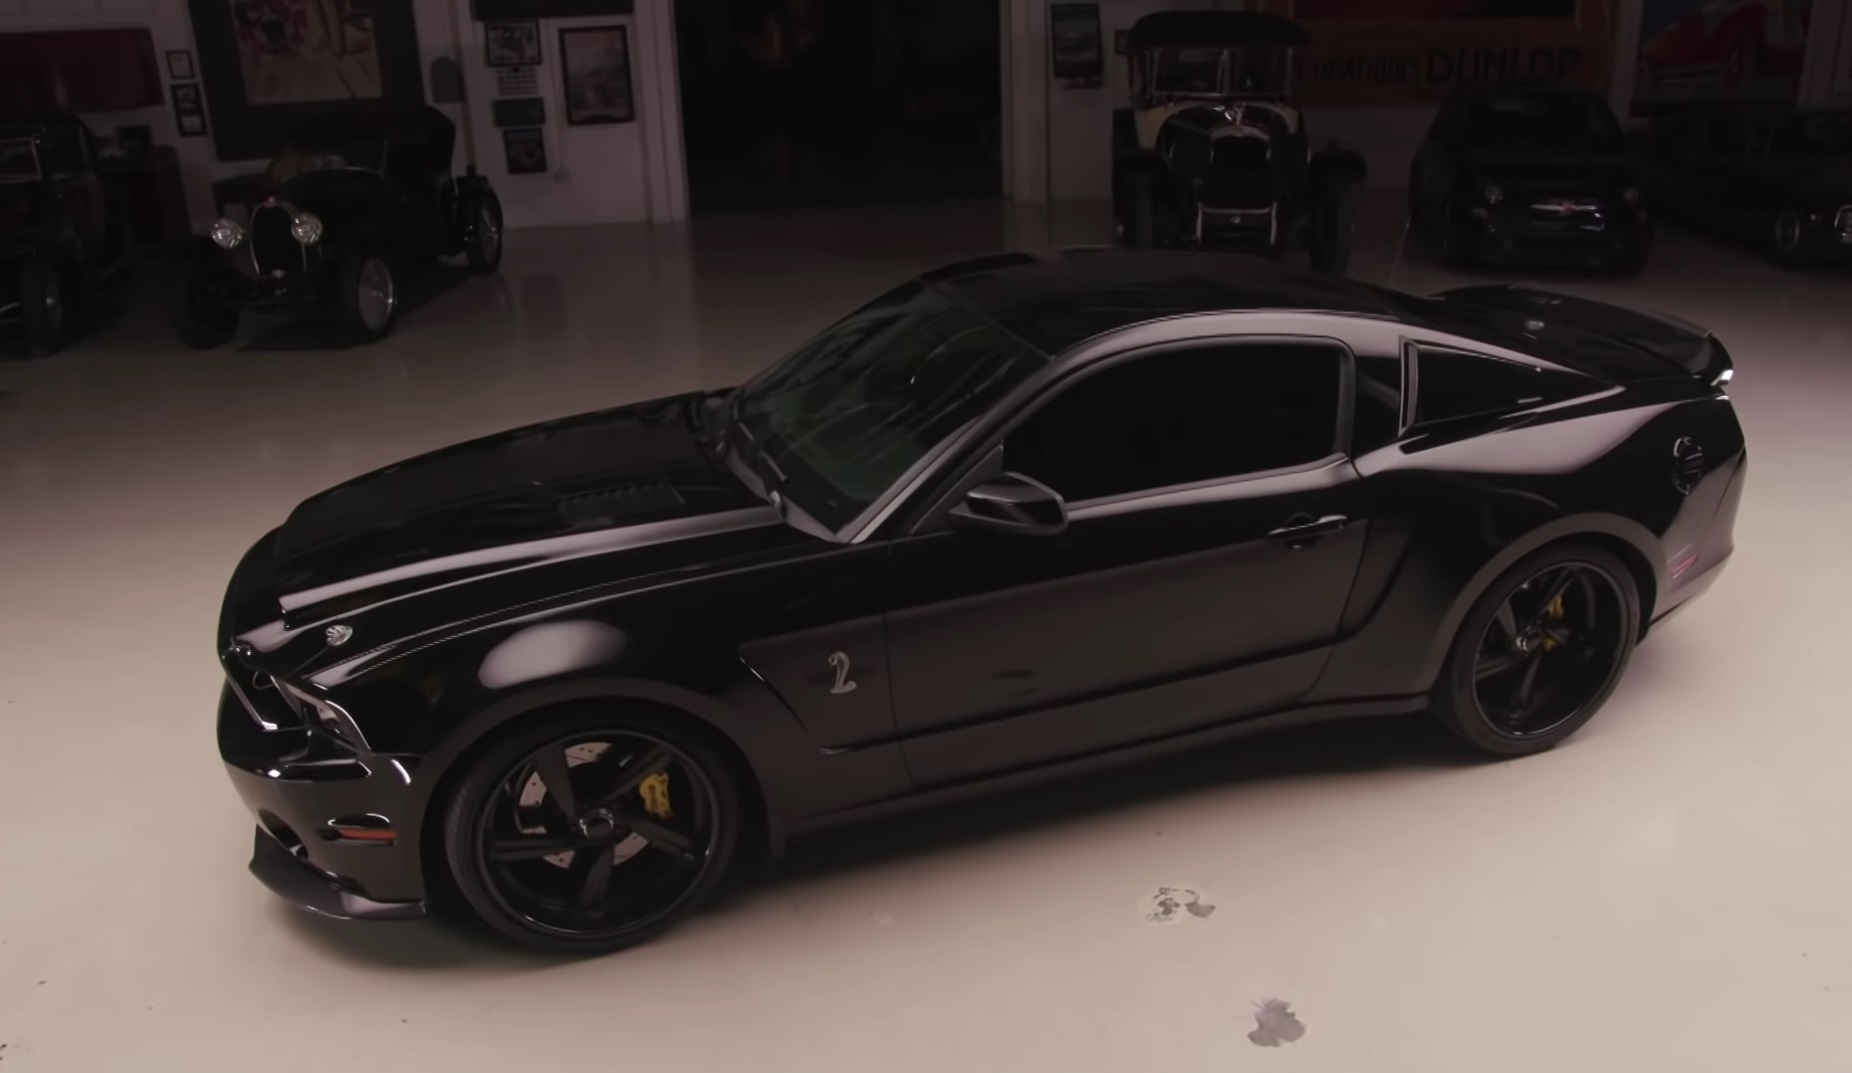 Video: Jim Caviezel's 2014 Ford Mustang Shelby GT500 Super Snake - Jay Leno’s Garage